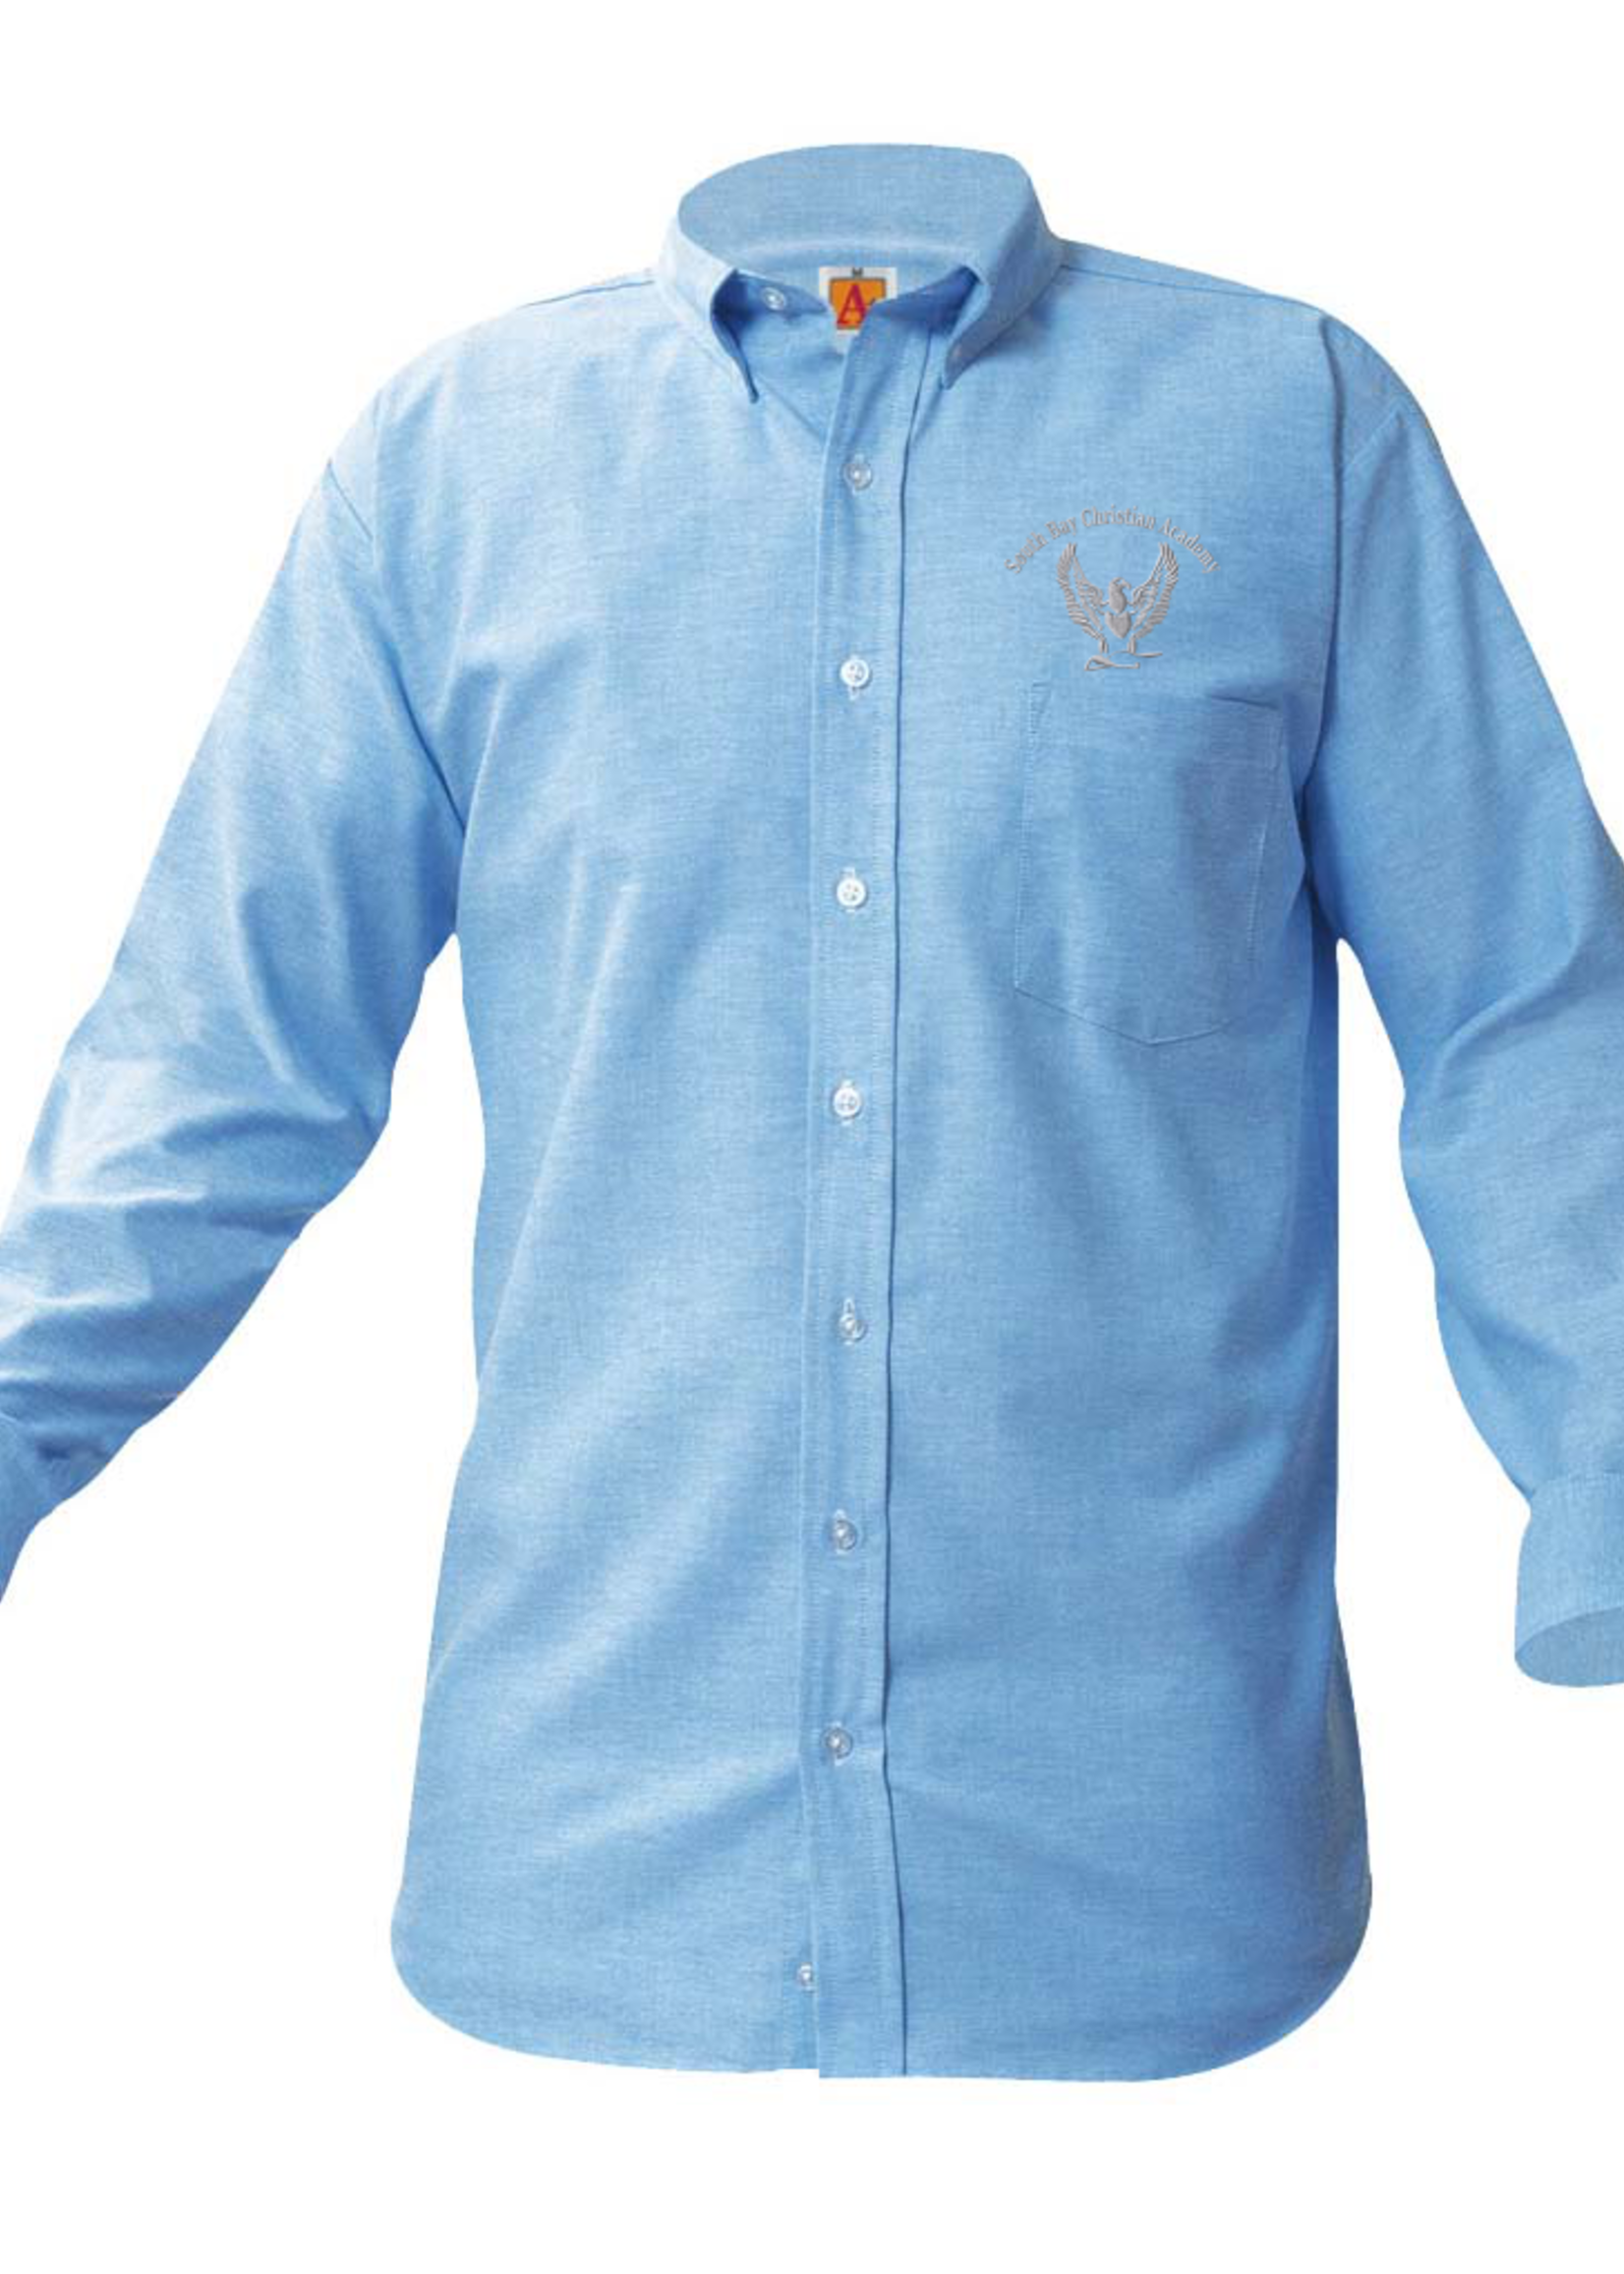 SBCA Long Sleeve Oxford Shirt